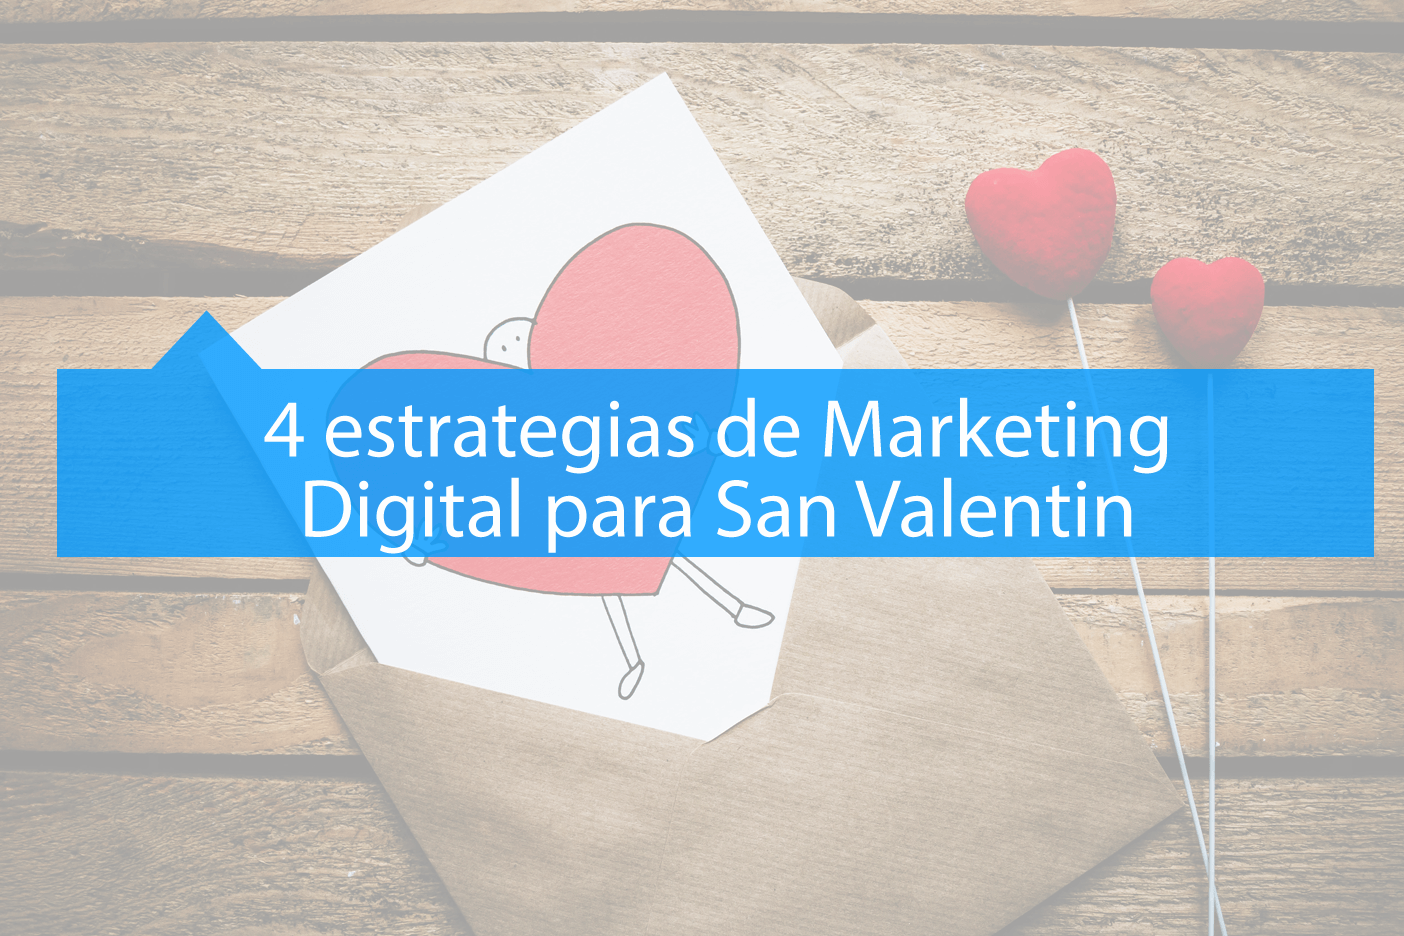 Estrategias de Marketing Digital para San Valentin